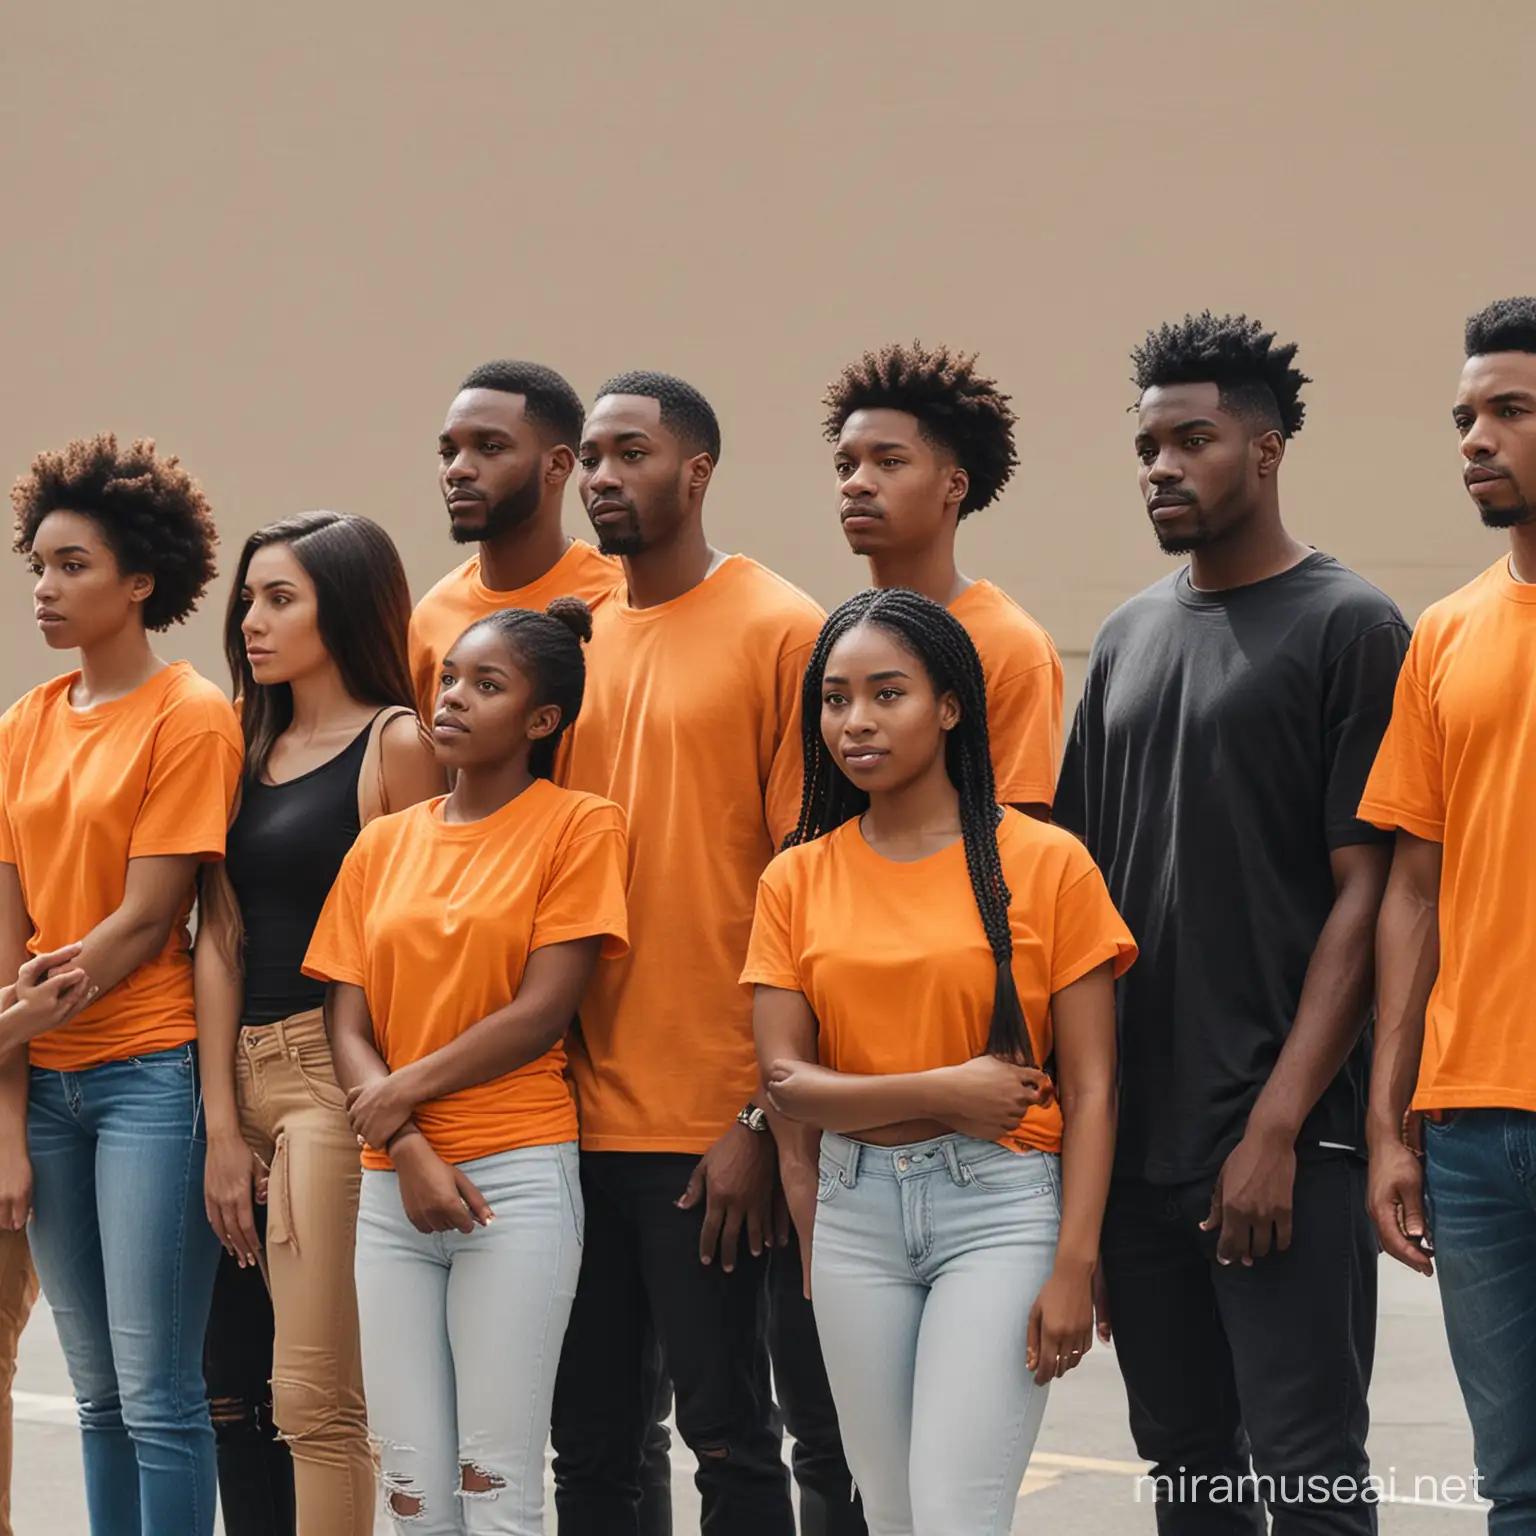 Diverse Community Gathering in Vibrant Orange Shirts